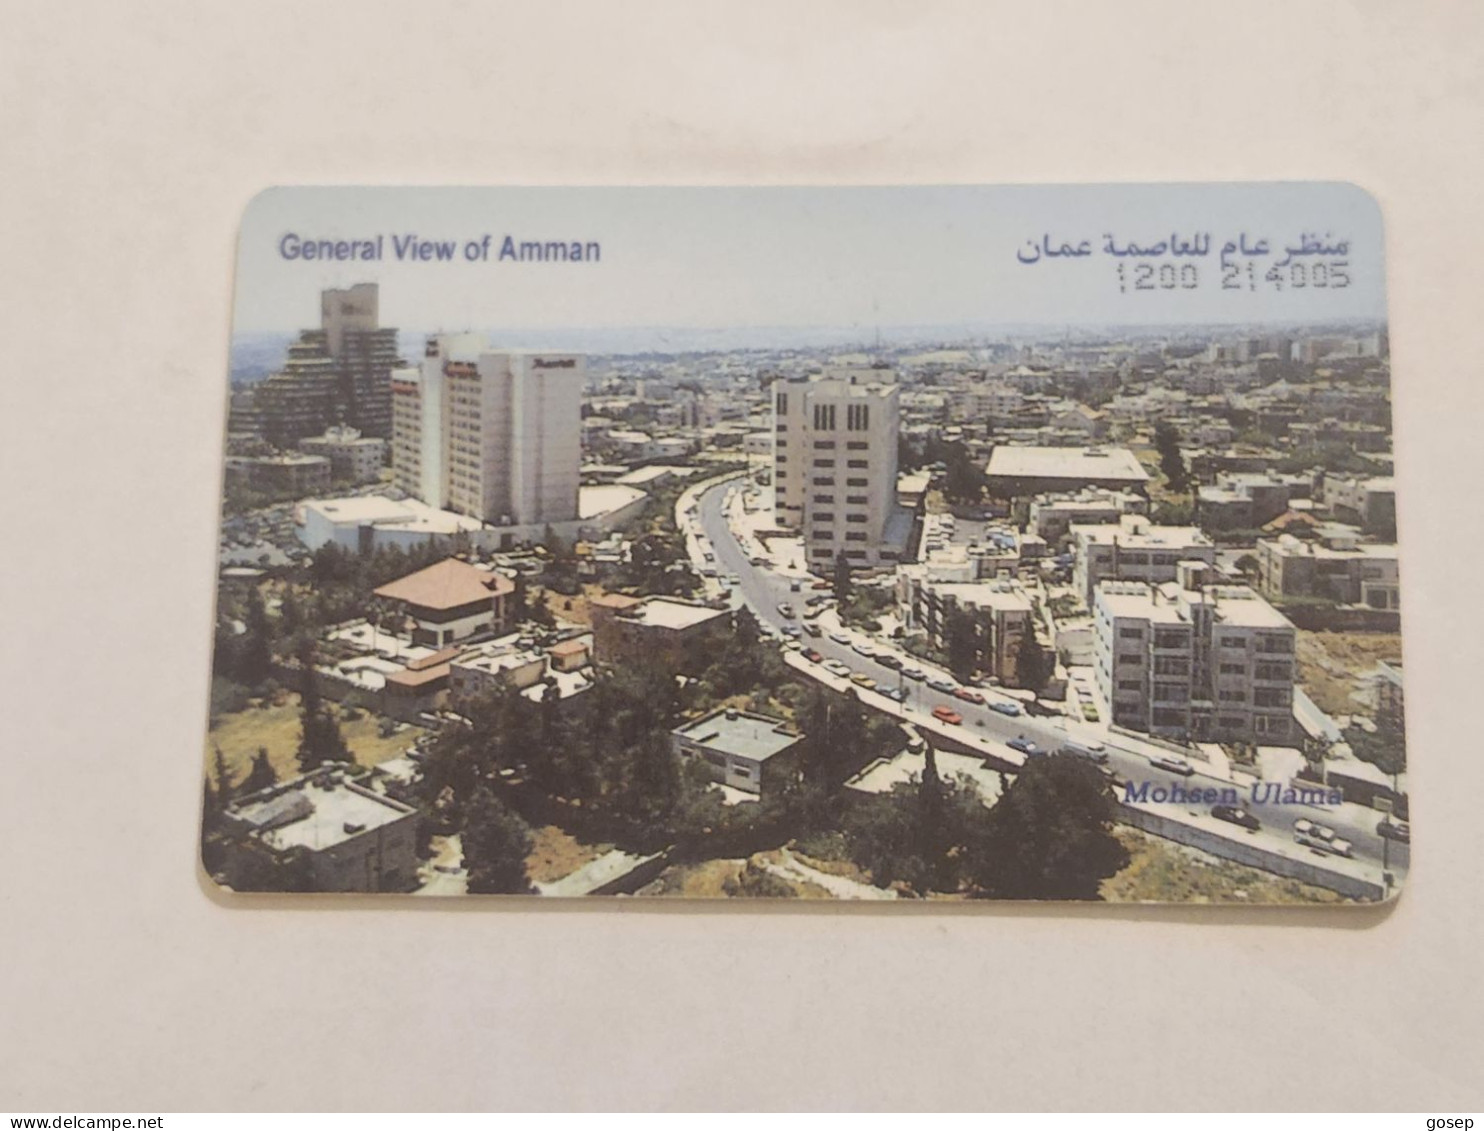 JORDAN-(JO-ALO-0028)-King Abdullah Mosque-(125)-(1200-214005)-(15JD)-(9/2000)-used Card+1card Prepiad Free - Jordanie